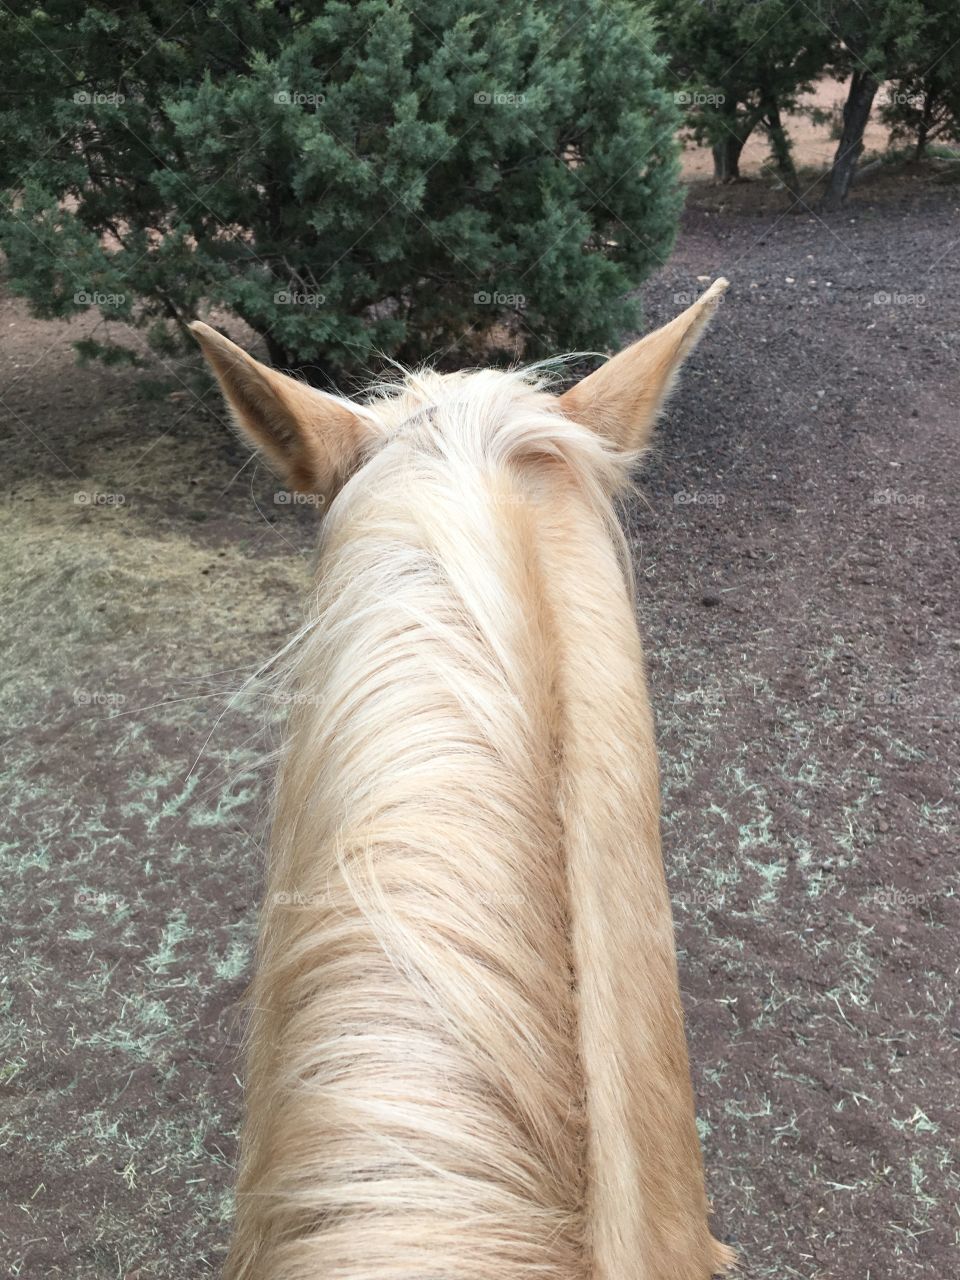 Horse ear view